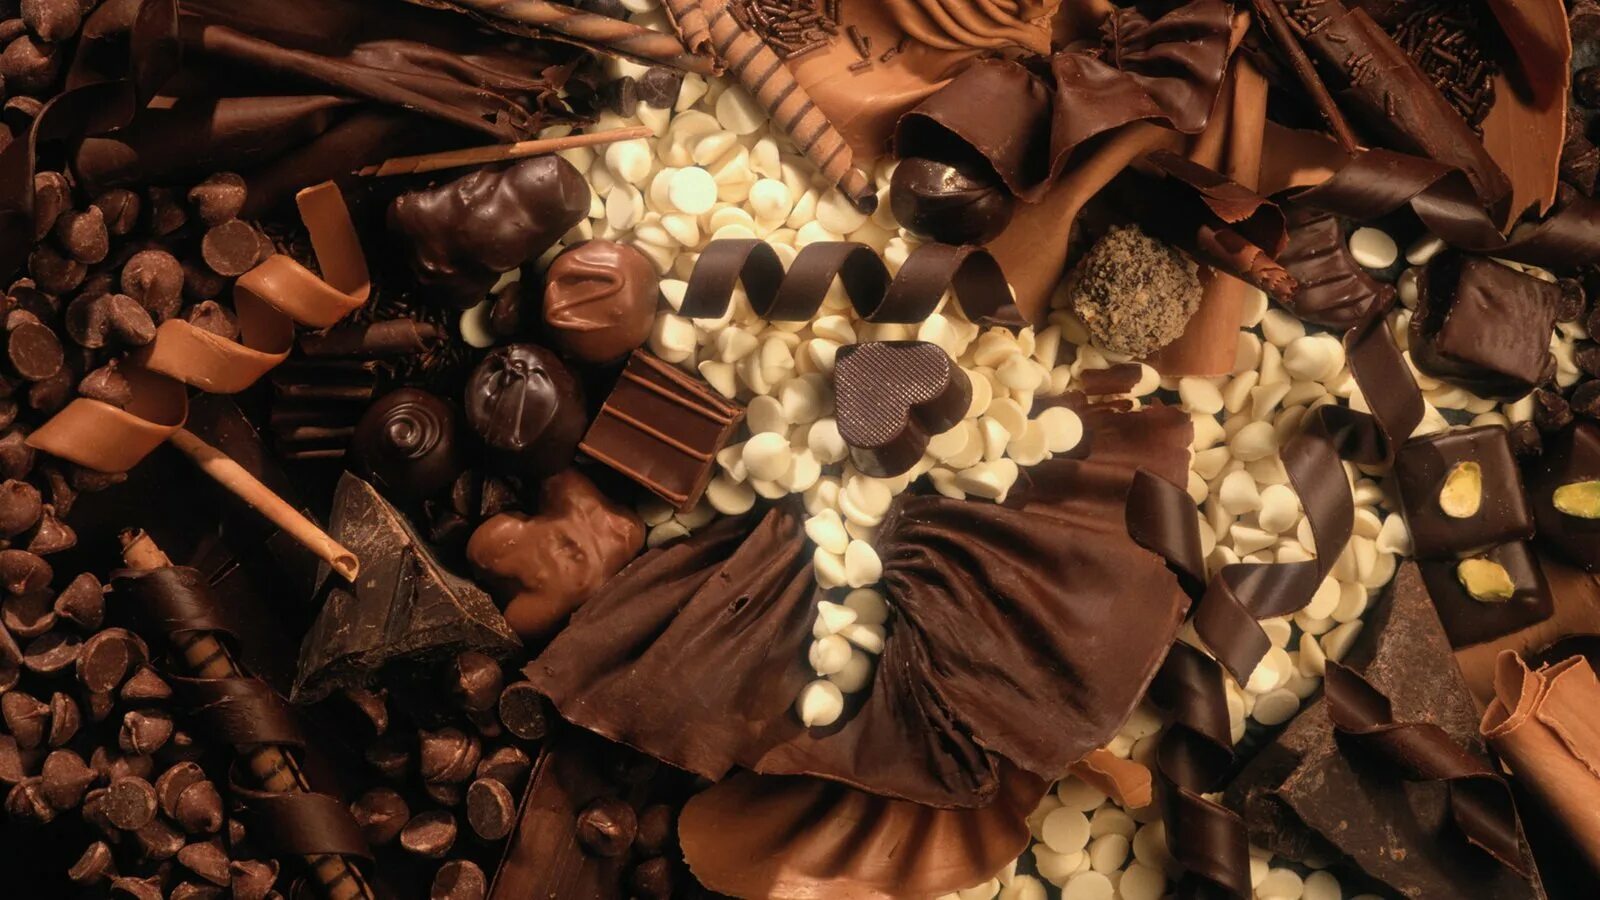 Сад шоколада. Шоколадные конфеты. Шоколадные конфеты Эстетика. Шоколадные конфеты Эстика. Обои на рабочий стол шоколад.